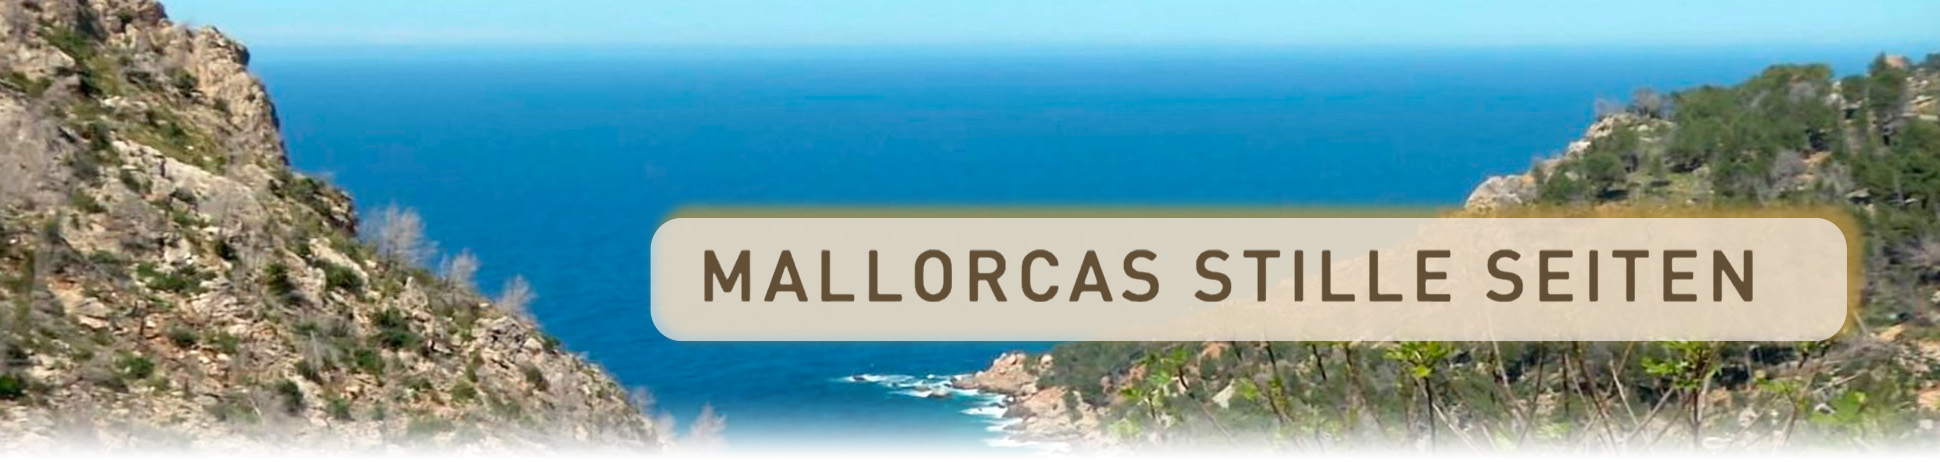 Mallorcas stille Seiten